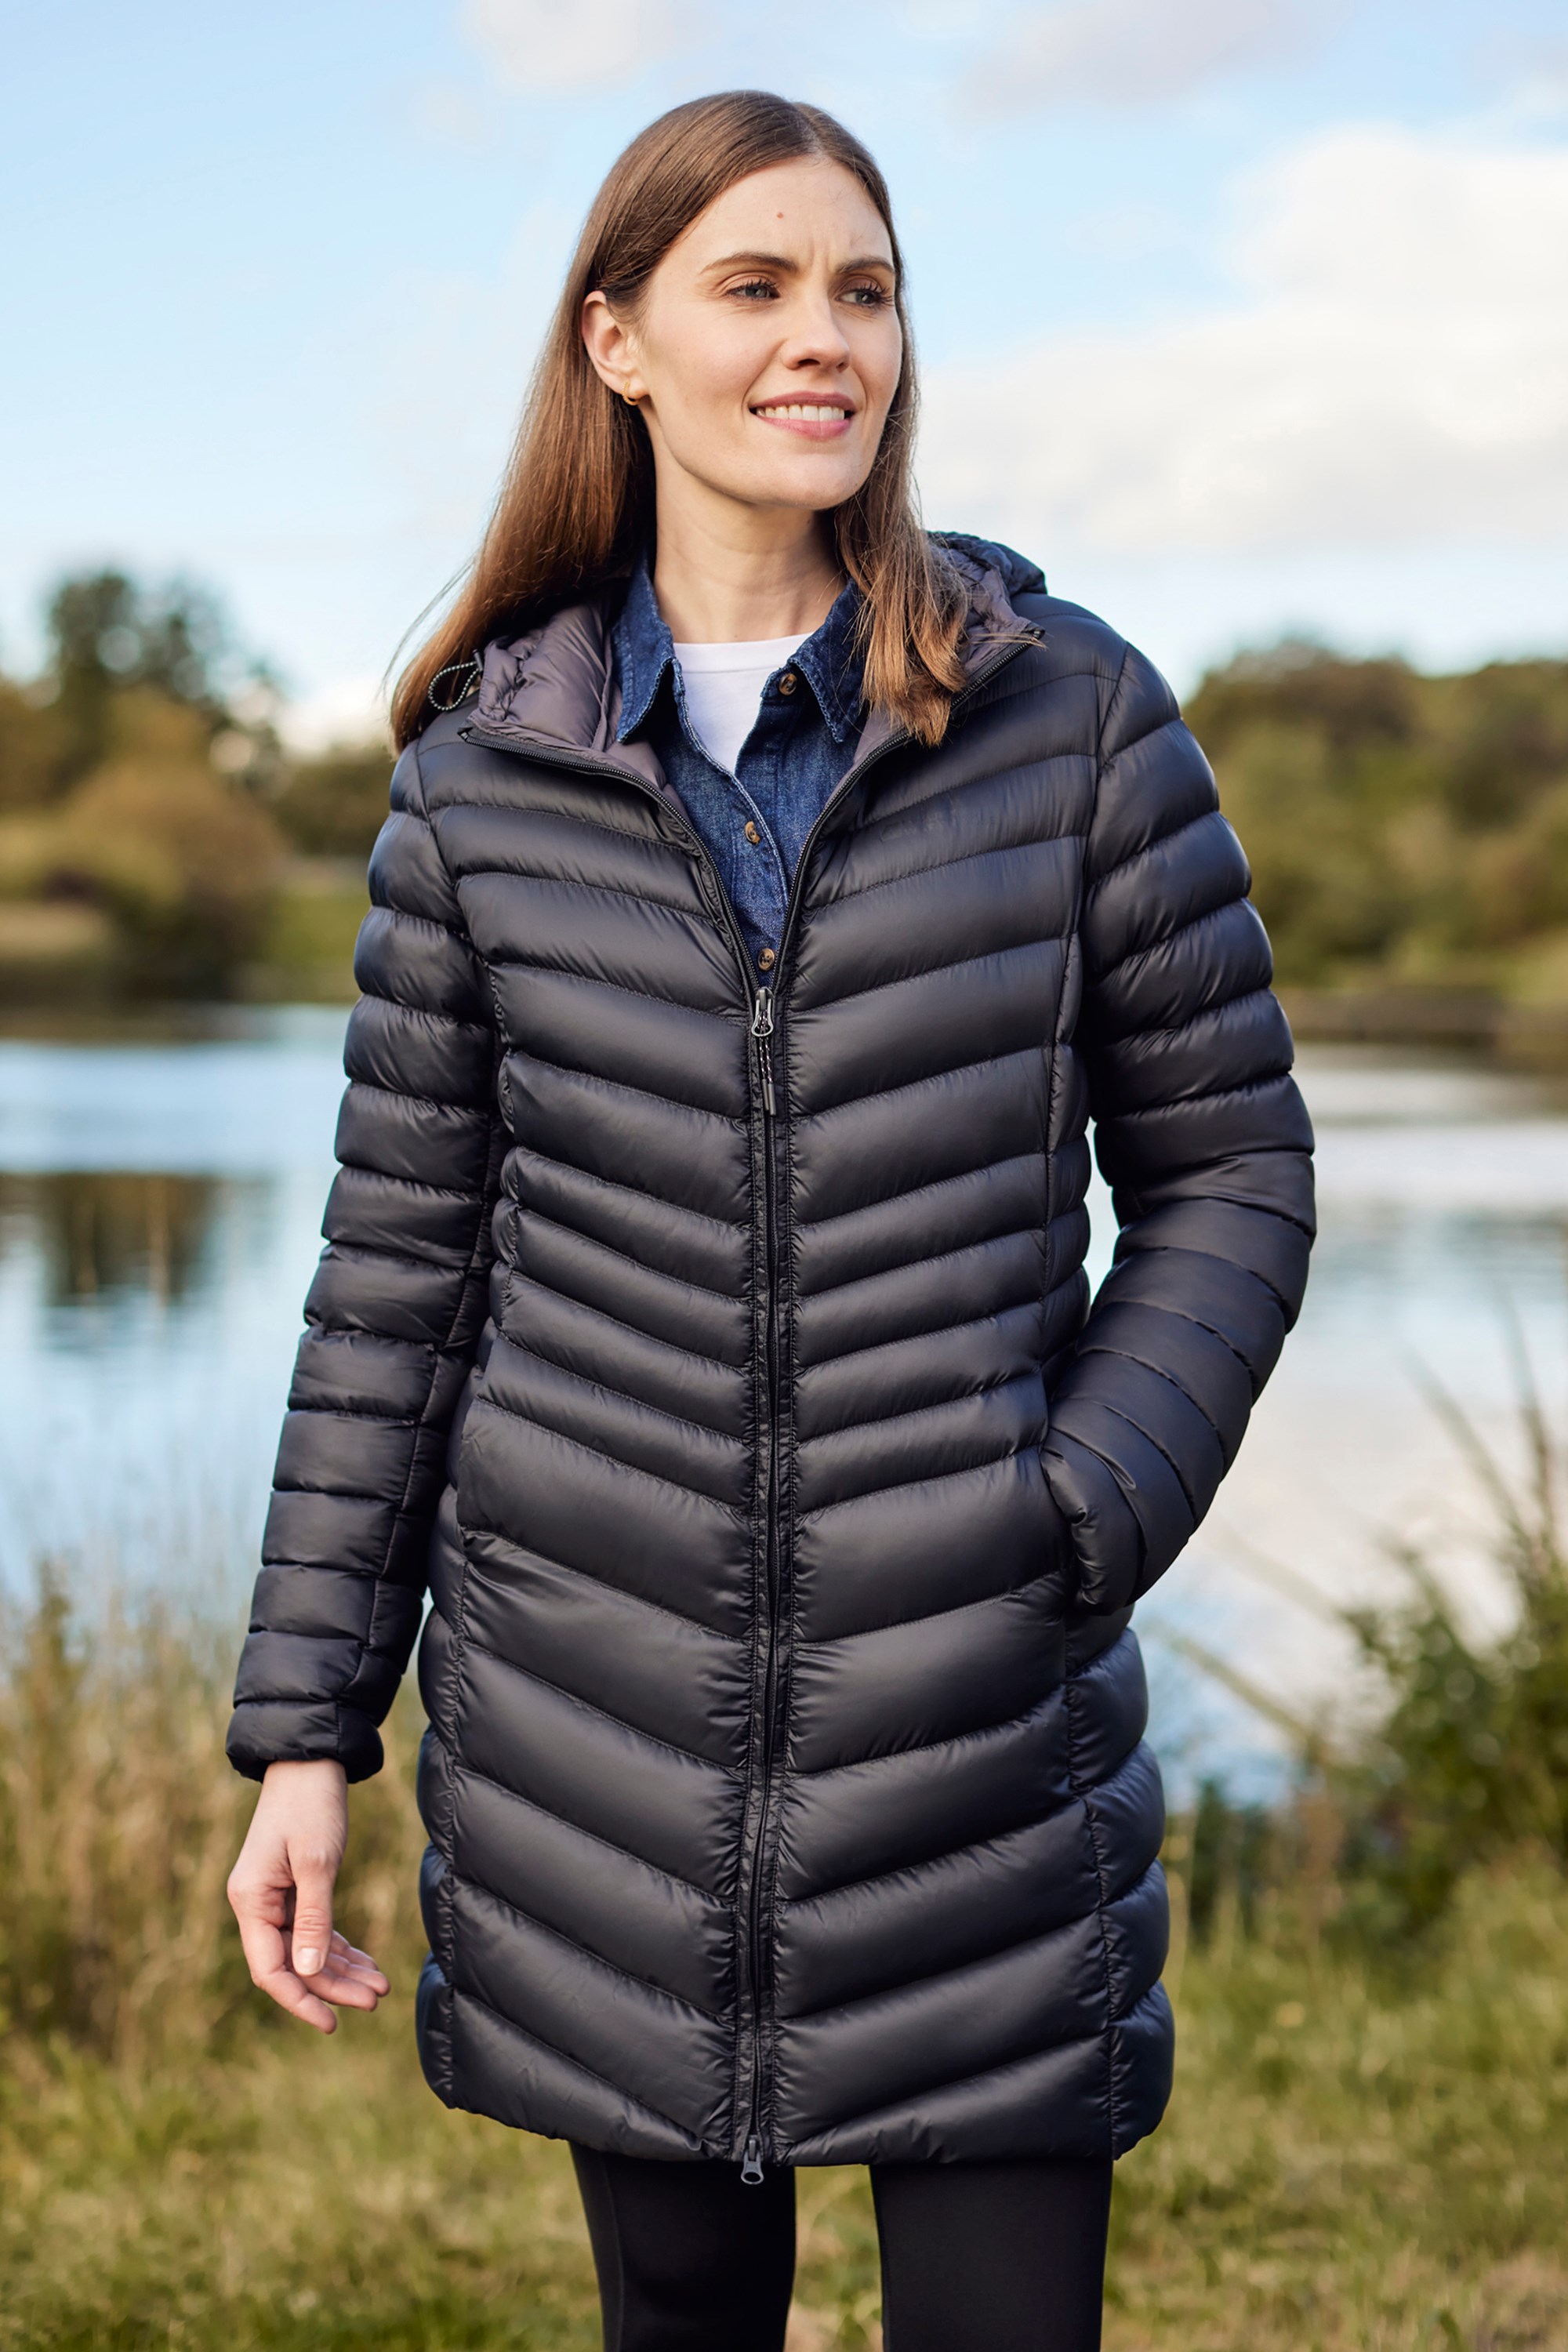 Fitted model women`s long jacket with hood and zip fastening -  Baduglobal.com | Long jackets for women, Winter jackets, Parka women